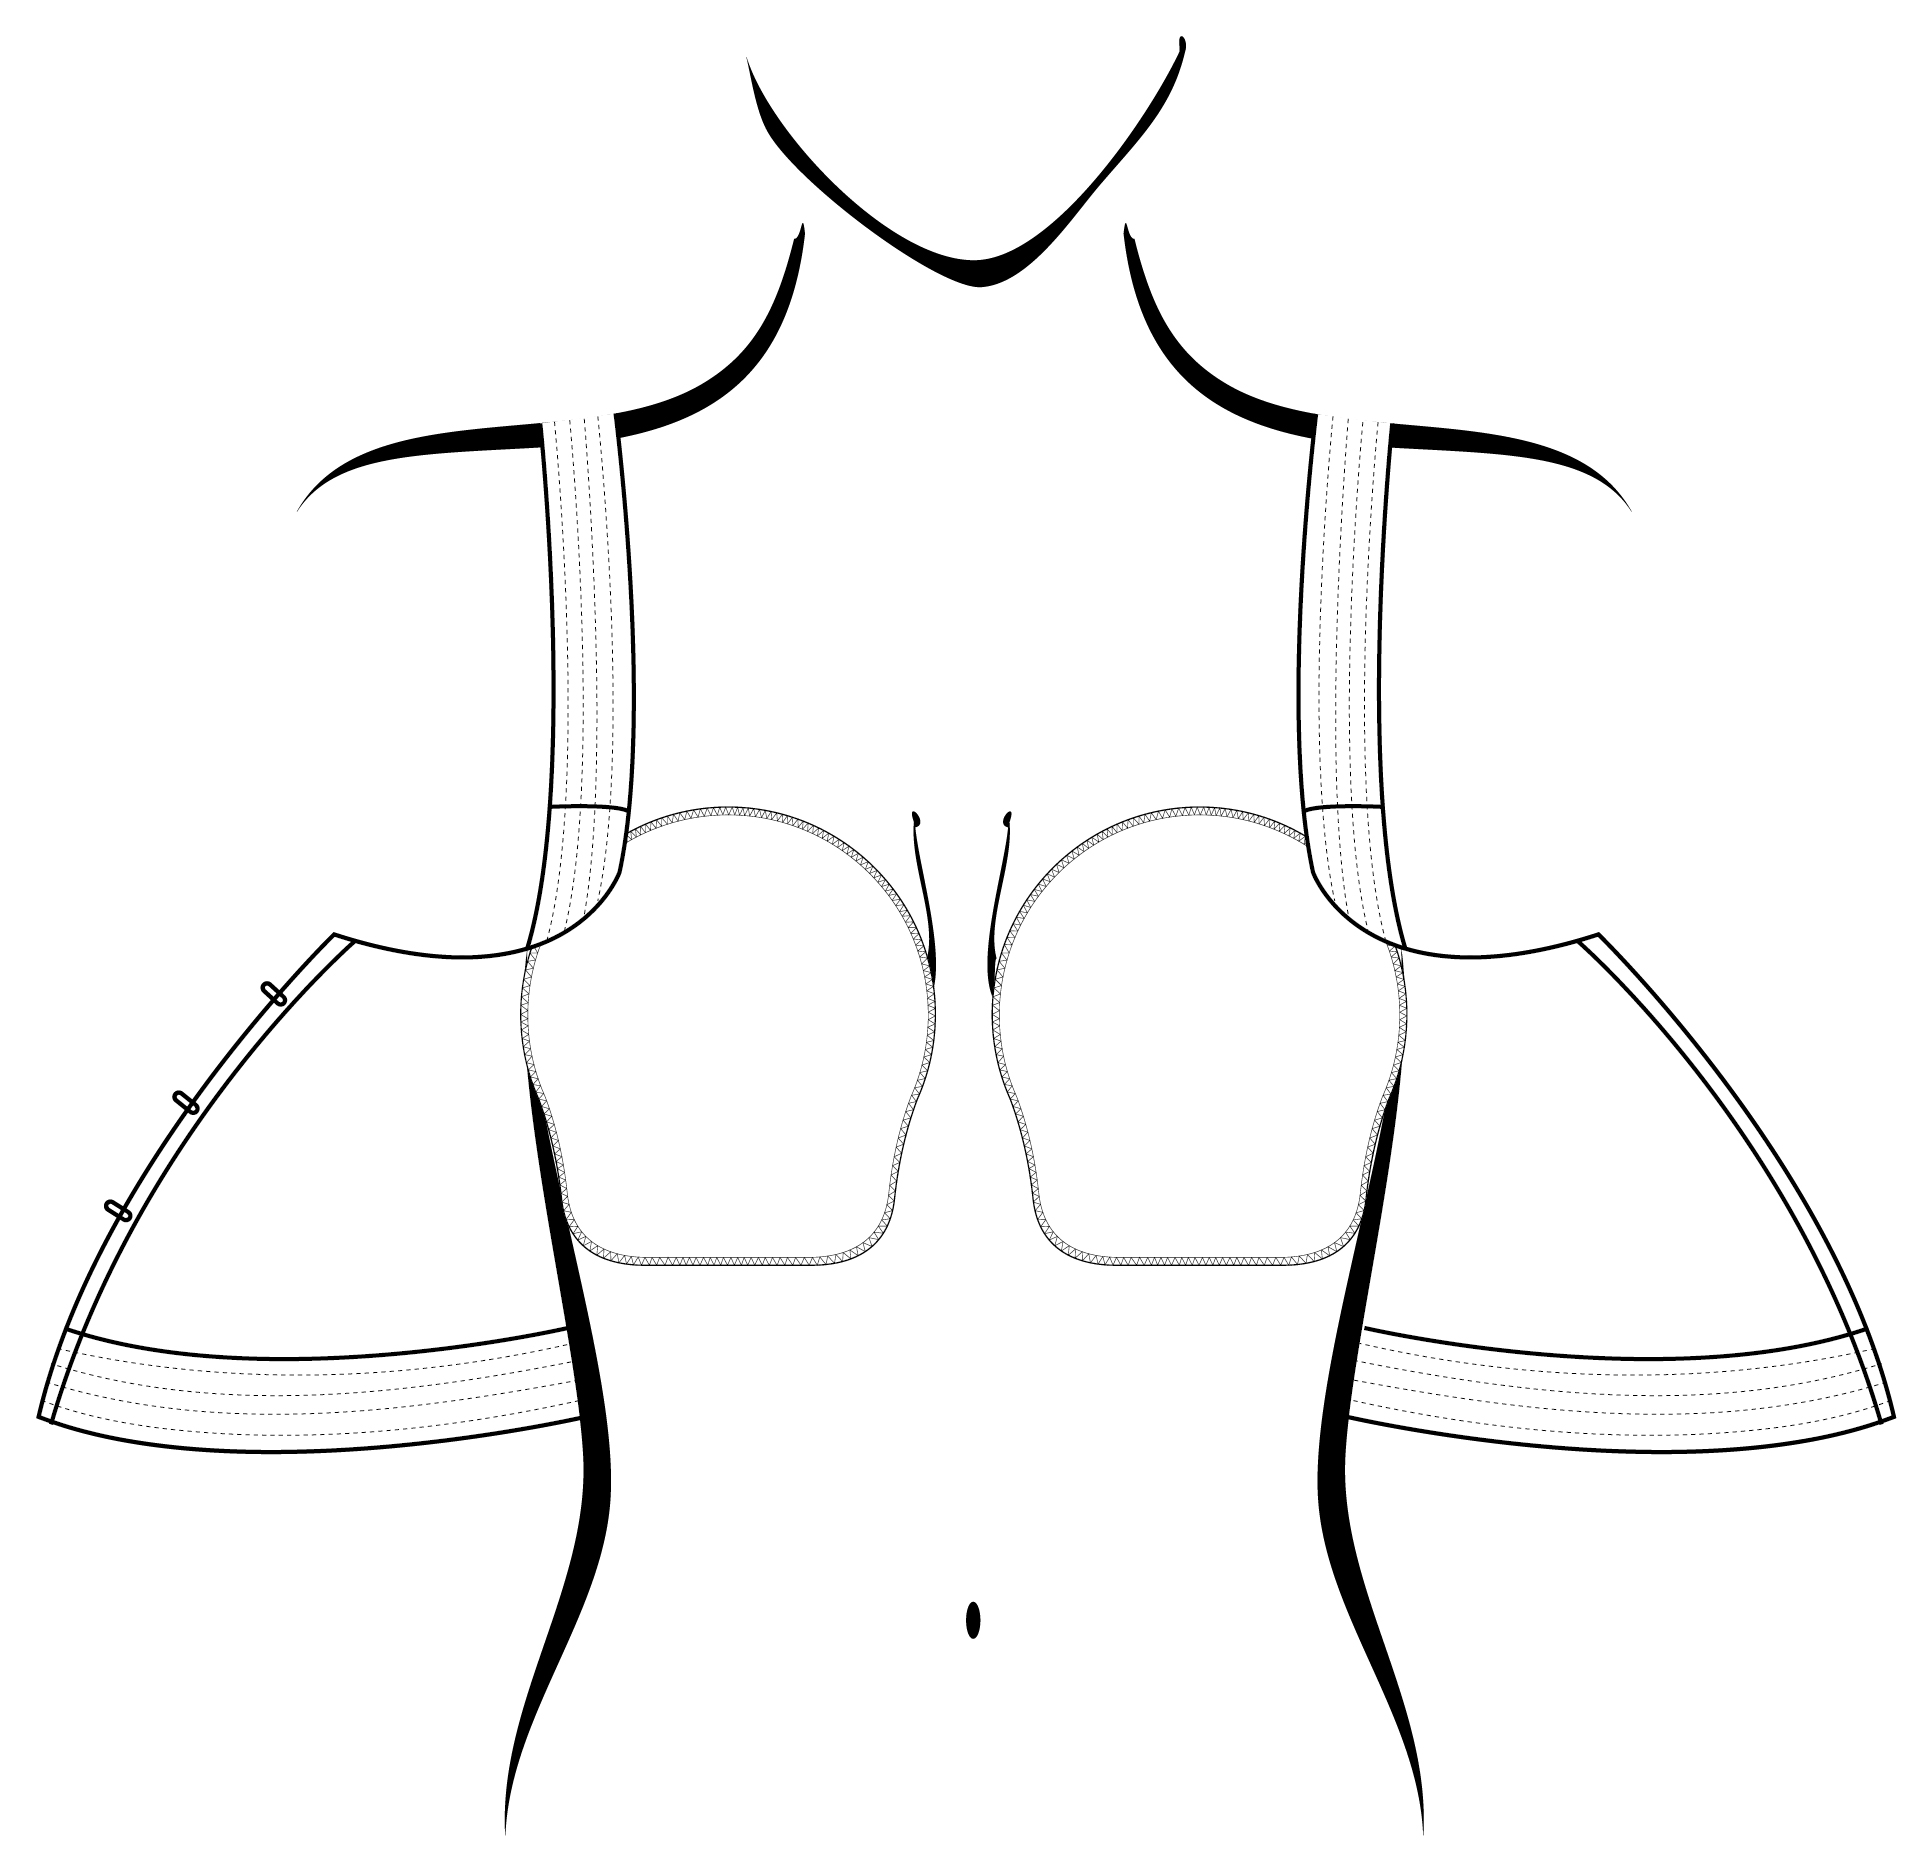 PANCZEL MASIA drawing with bra